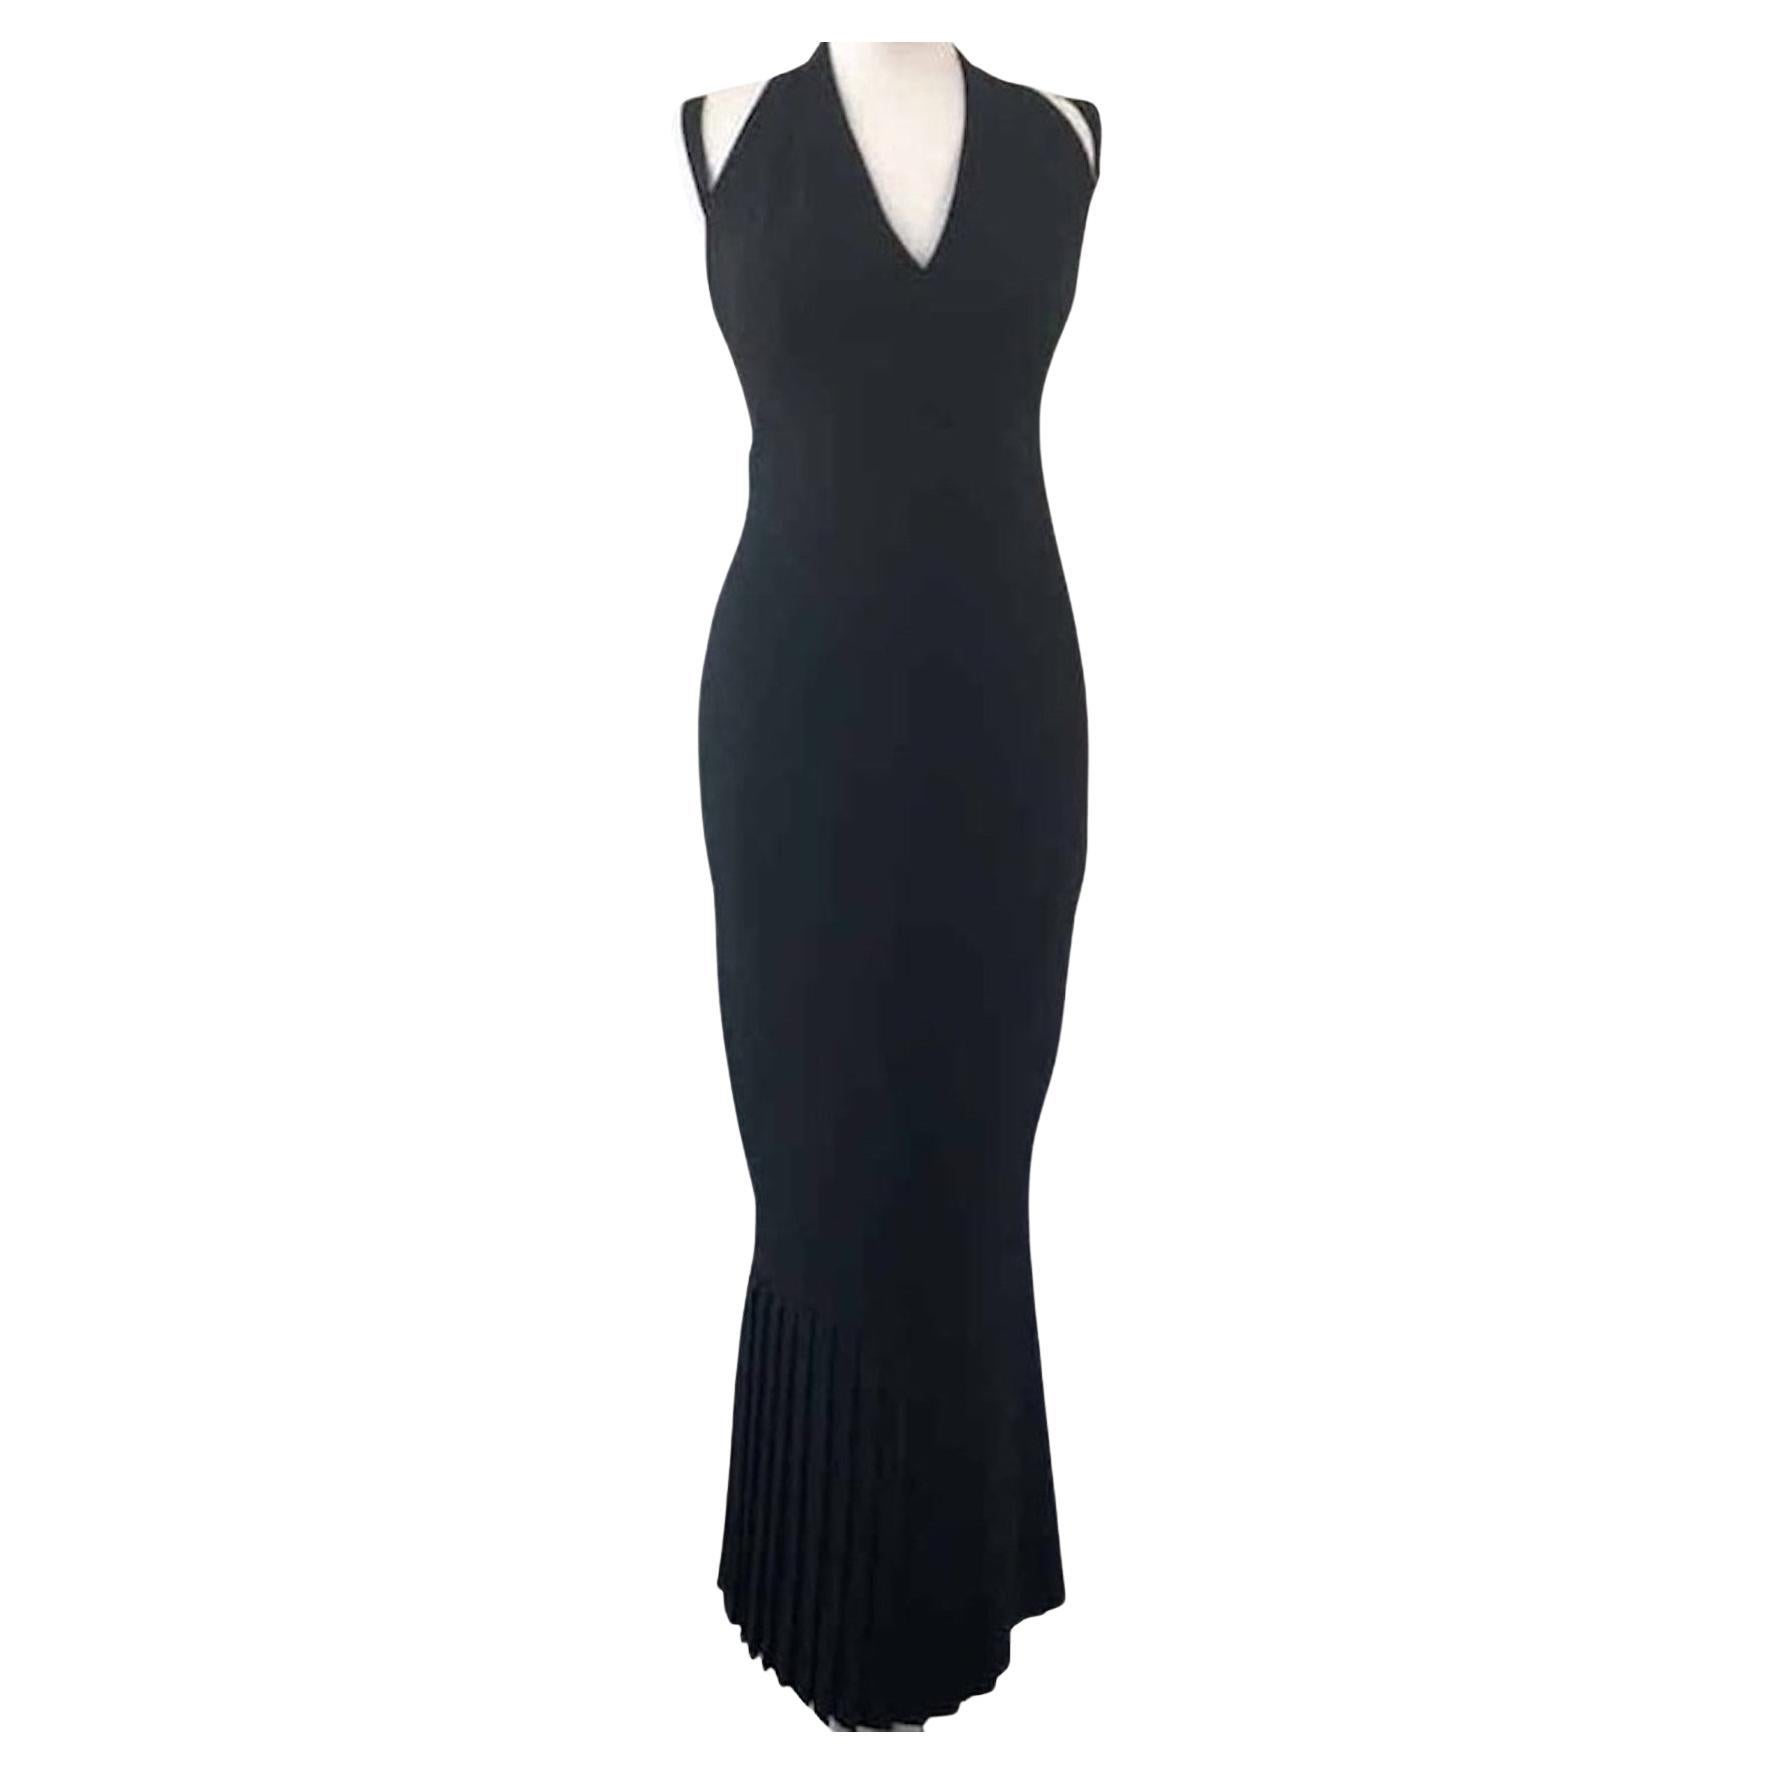 KARL LAGERFELD PARIS Black Long Evening Ruffled Dress Gown Circa 2000